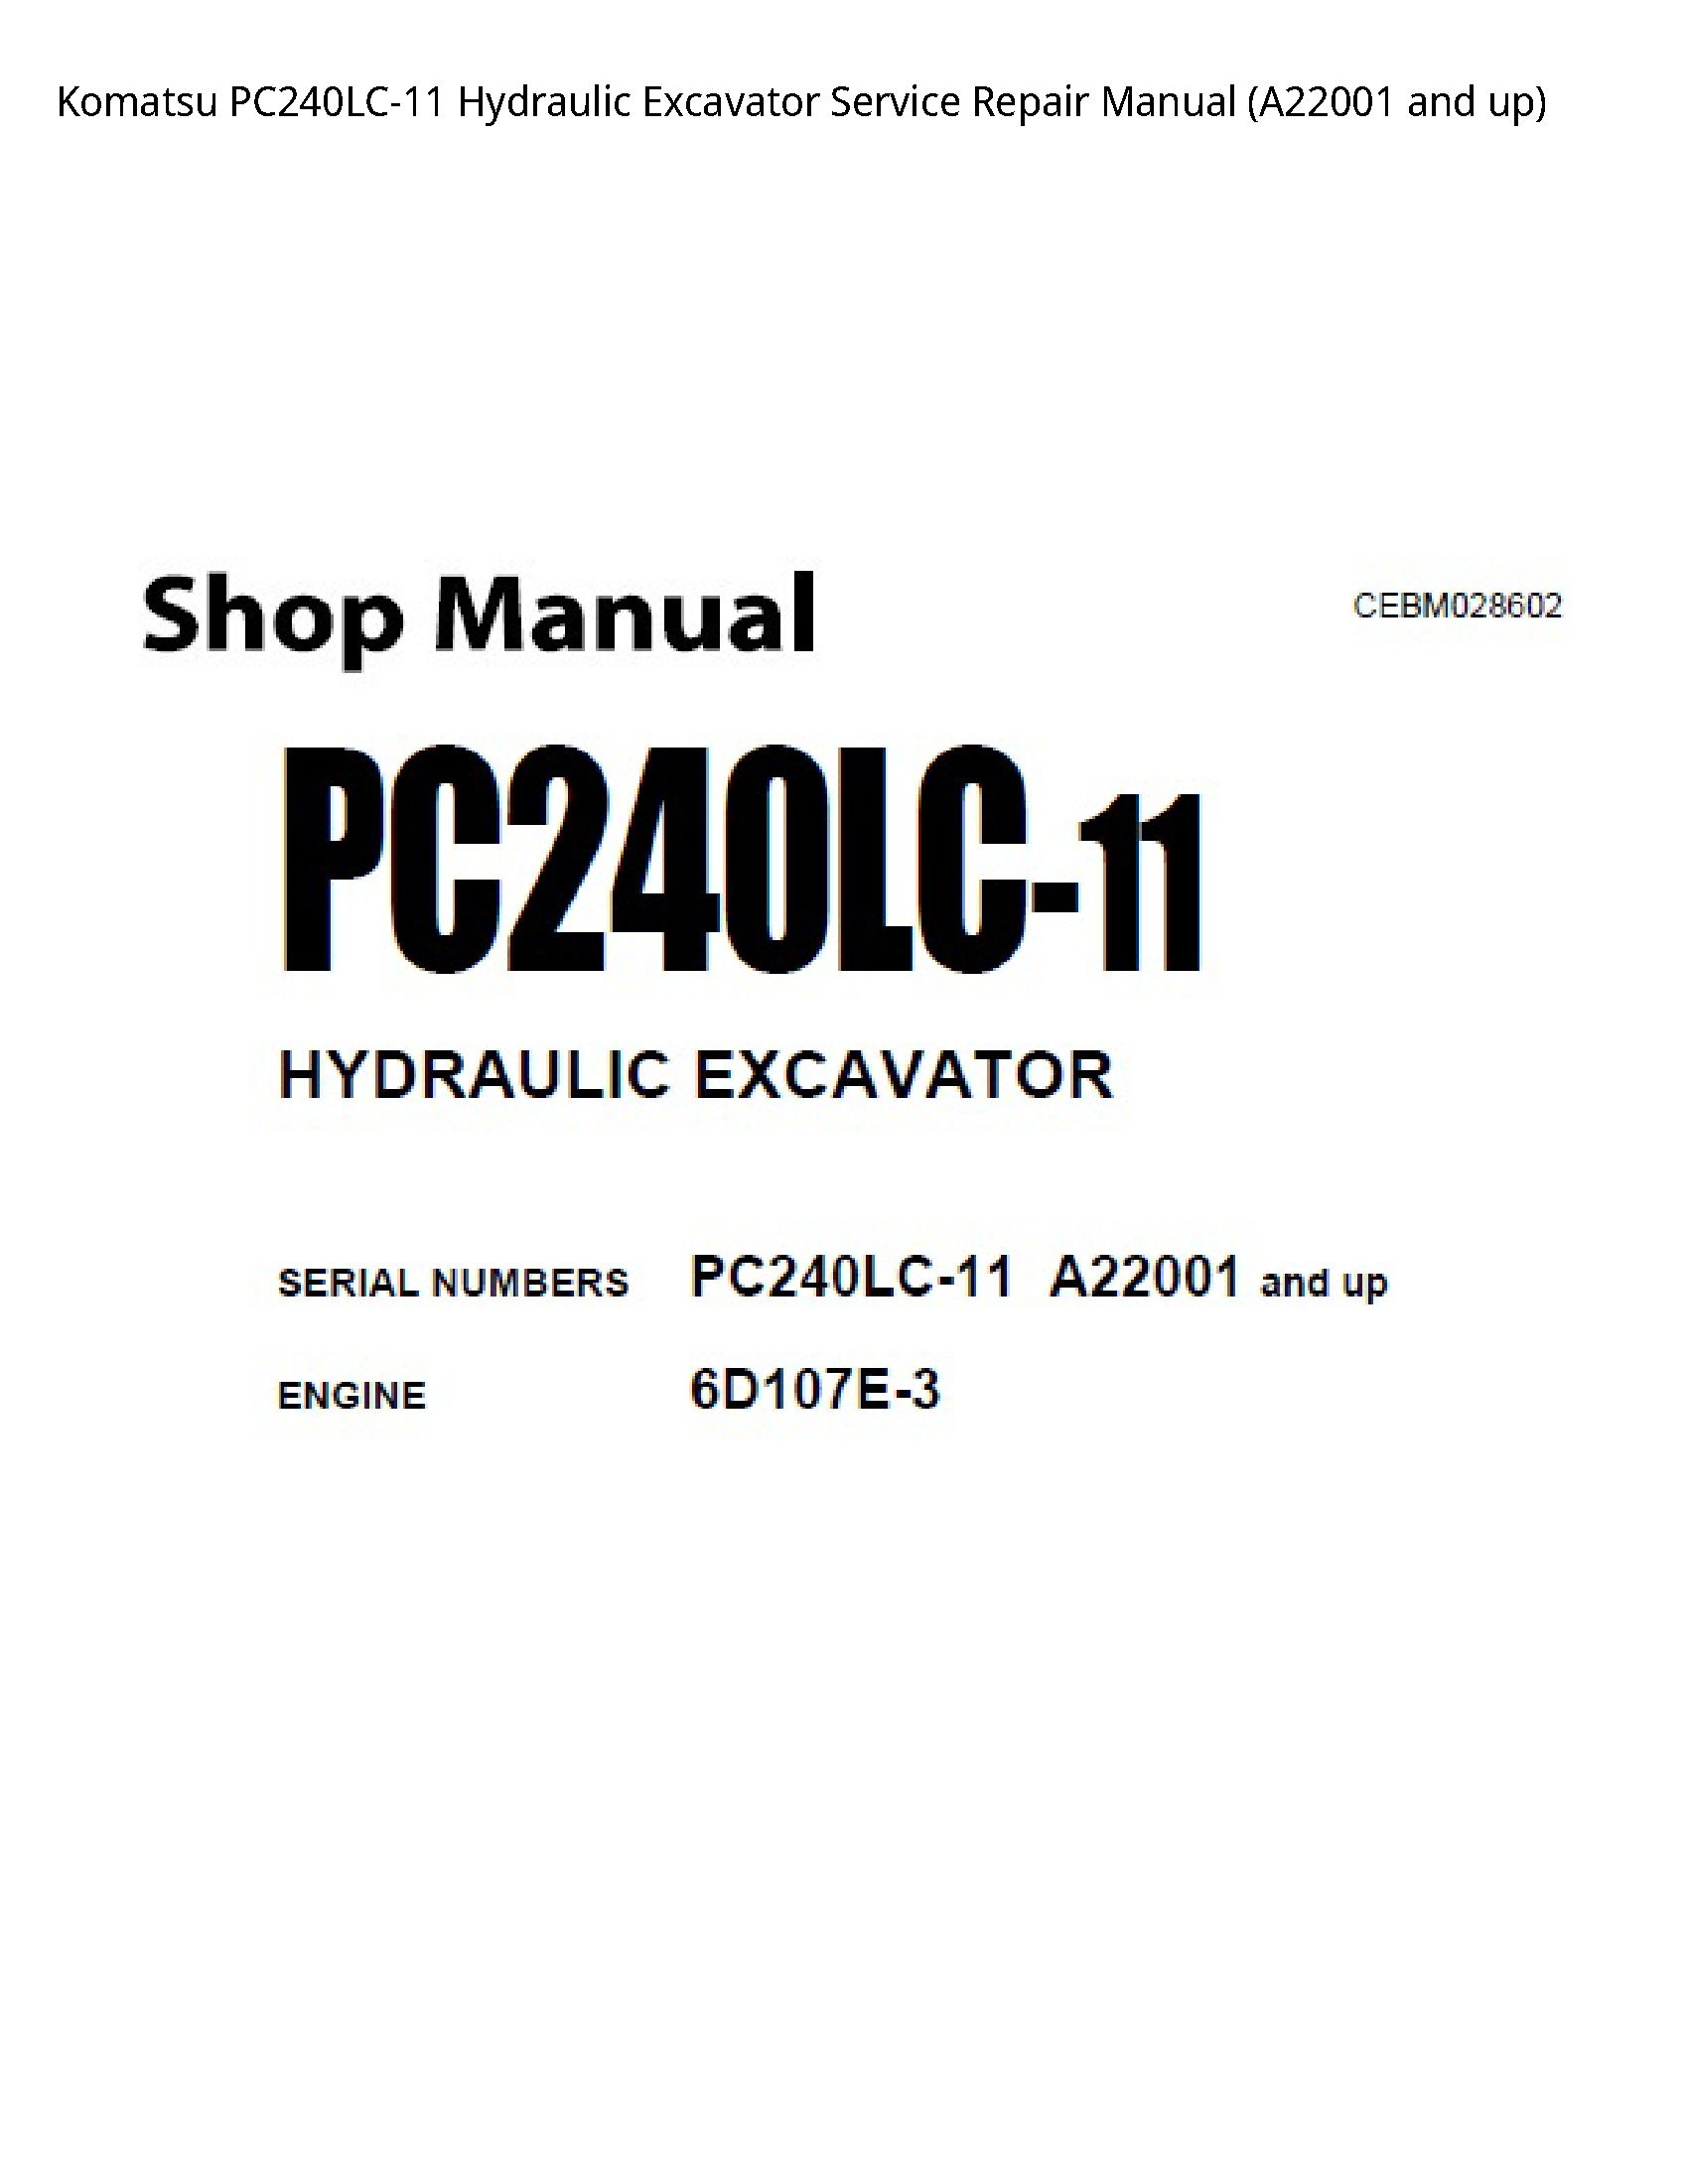 KOMATSU PC240LC-11 Hydraulic Excavator manual